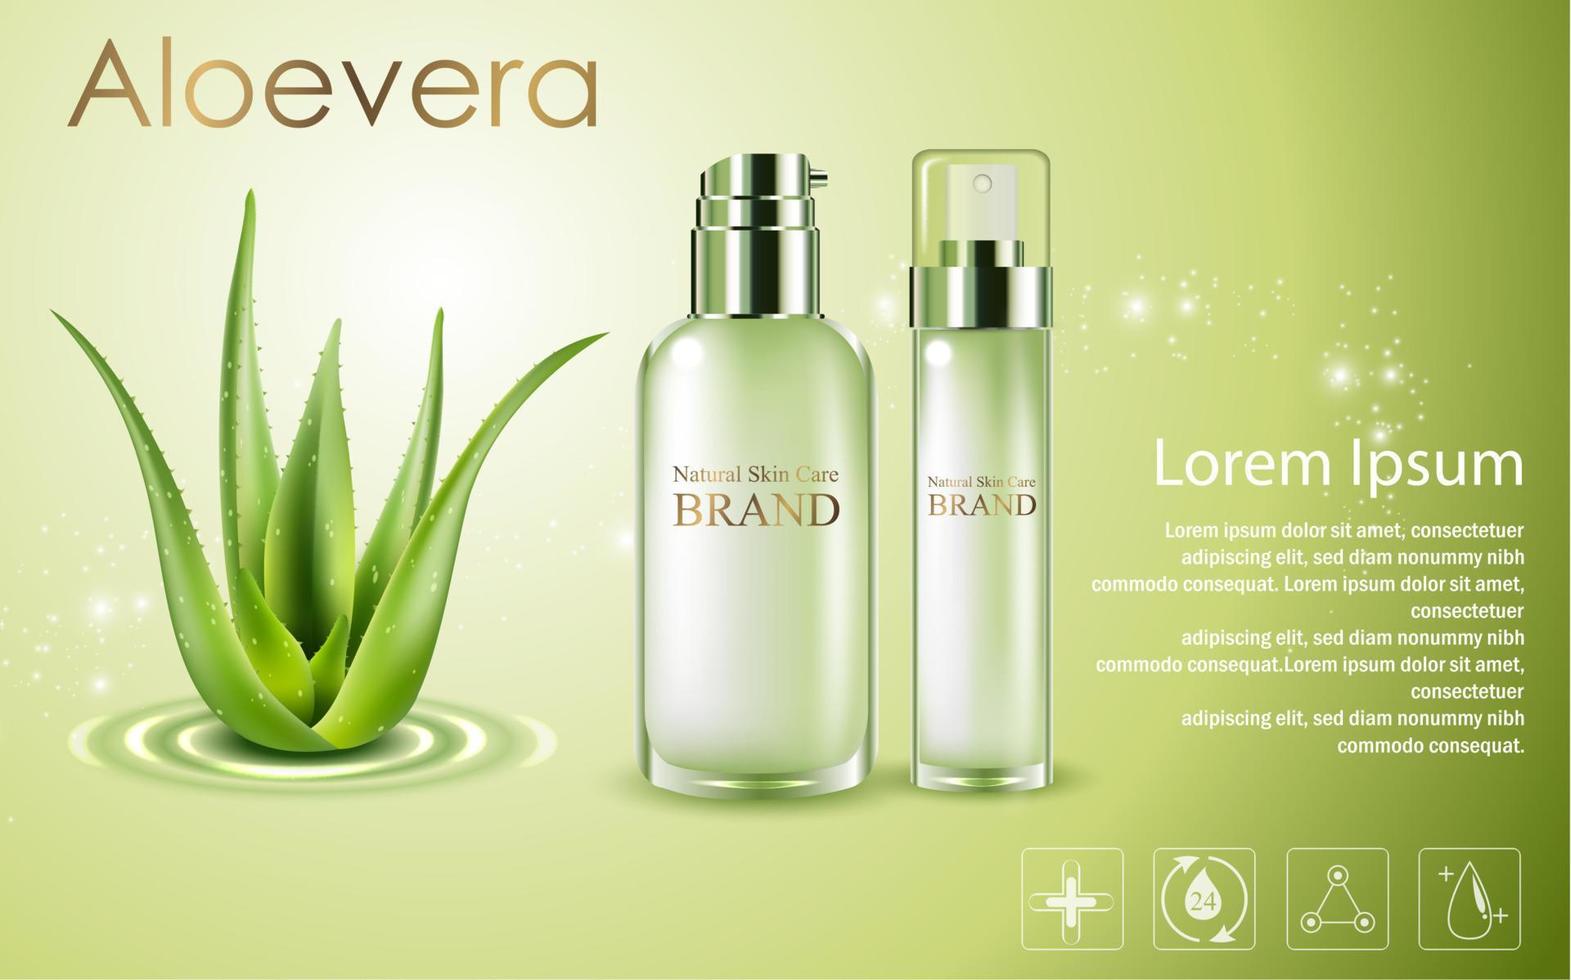 Vector illustration of Aloevera cosmetic ads, green spray bottles with aloevera